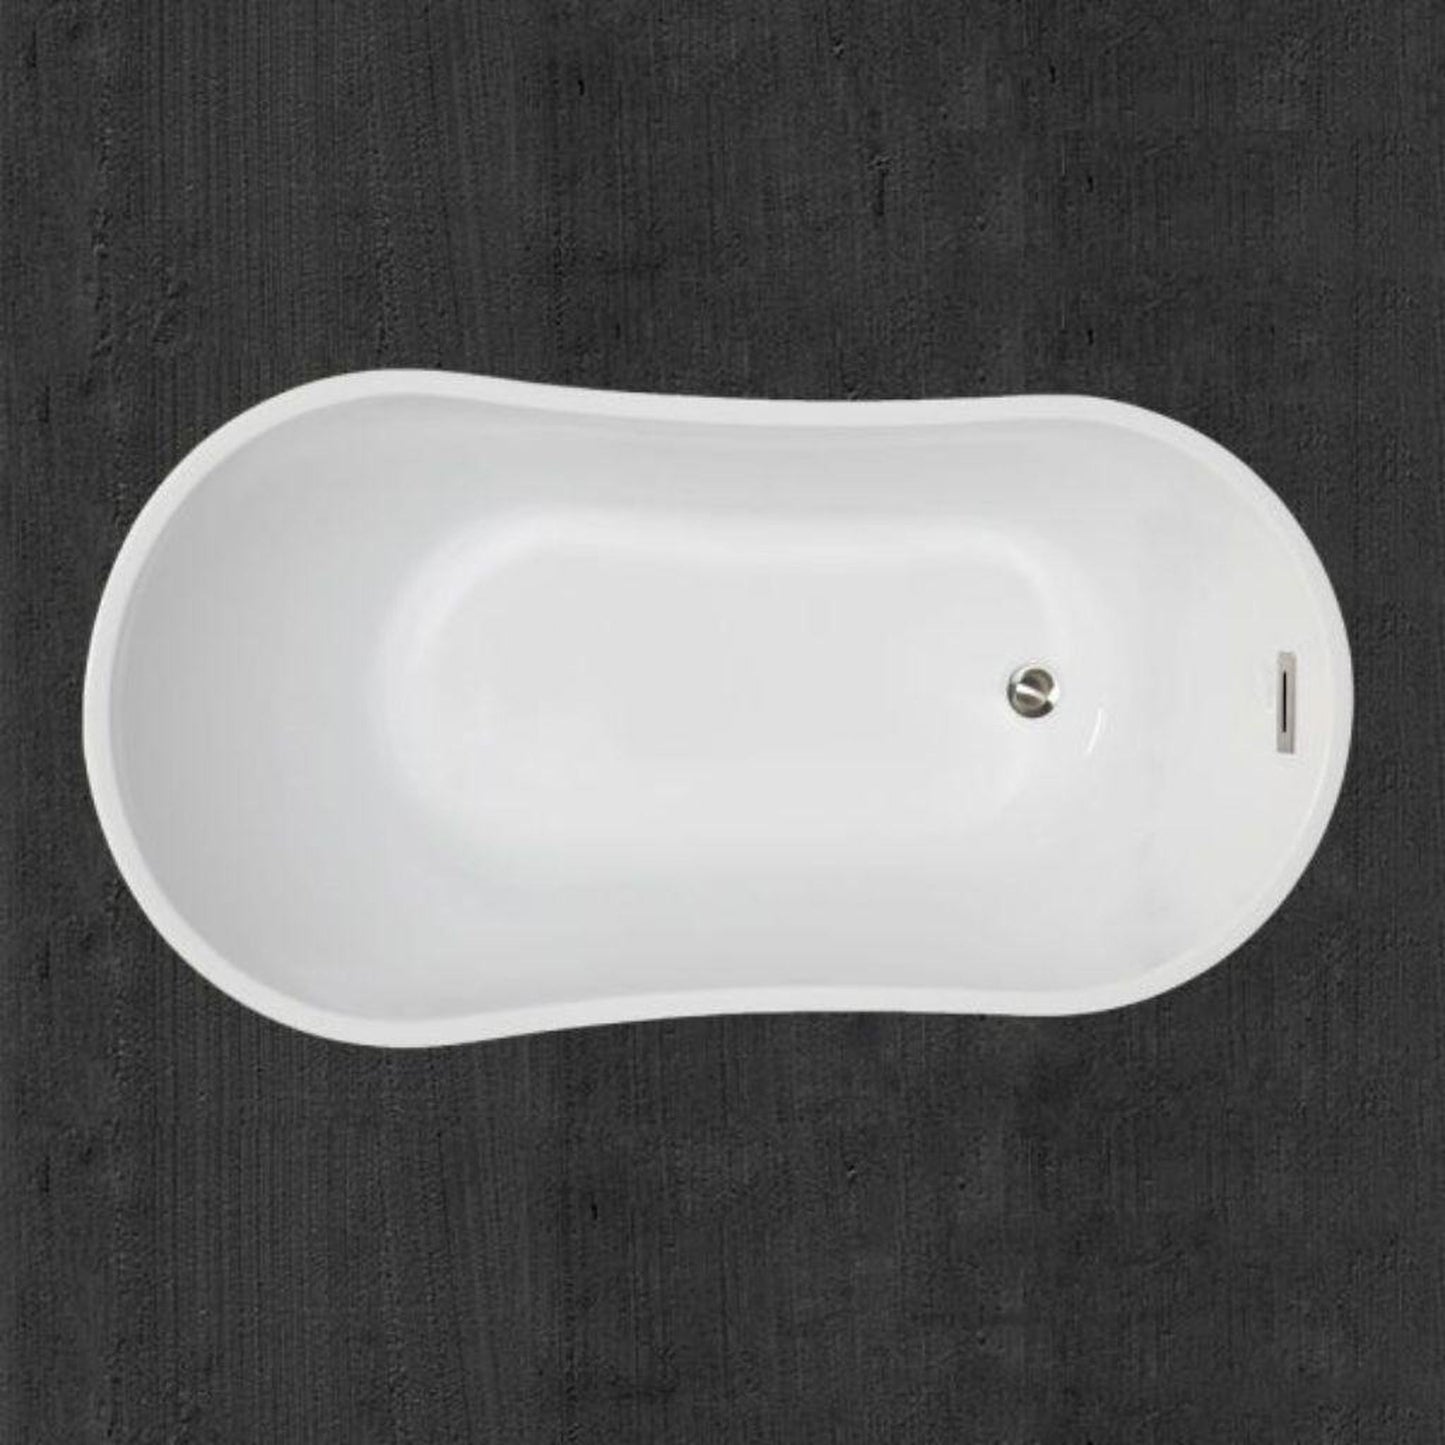 WoodBridge B1807 54" Black Acrylic Freestanding Contemporary Soaking Tub With Matte Black Overflow and Drain